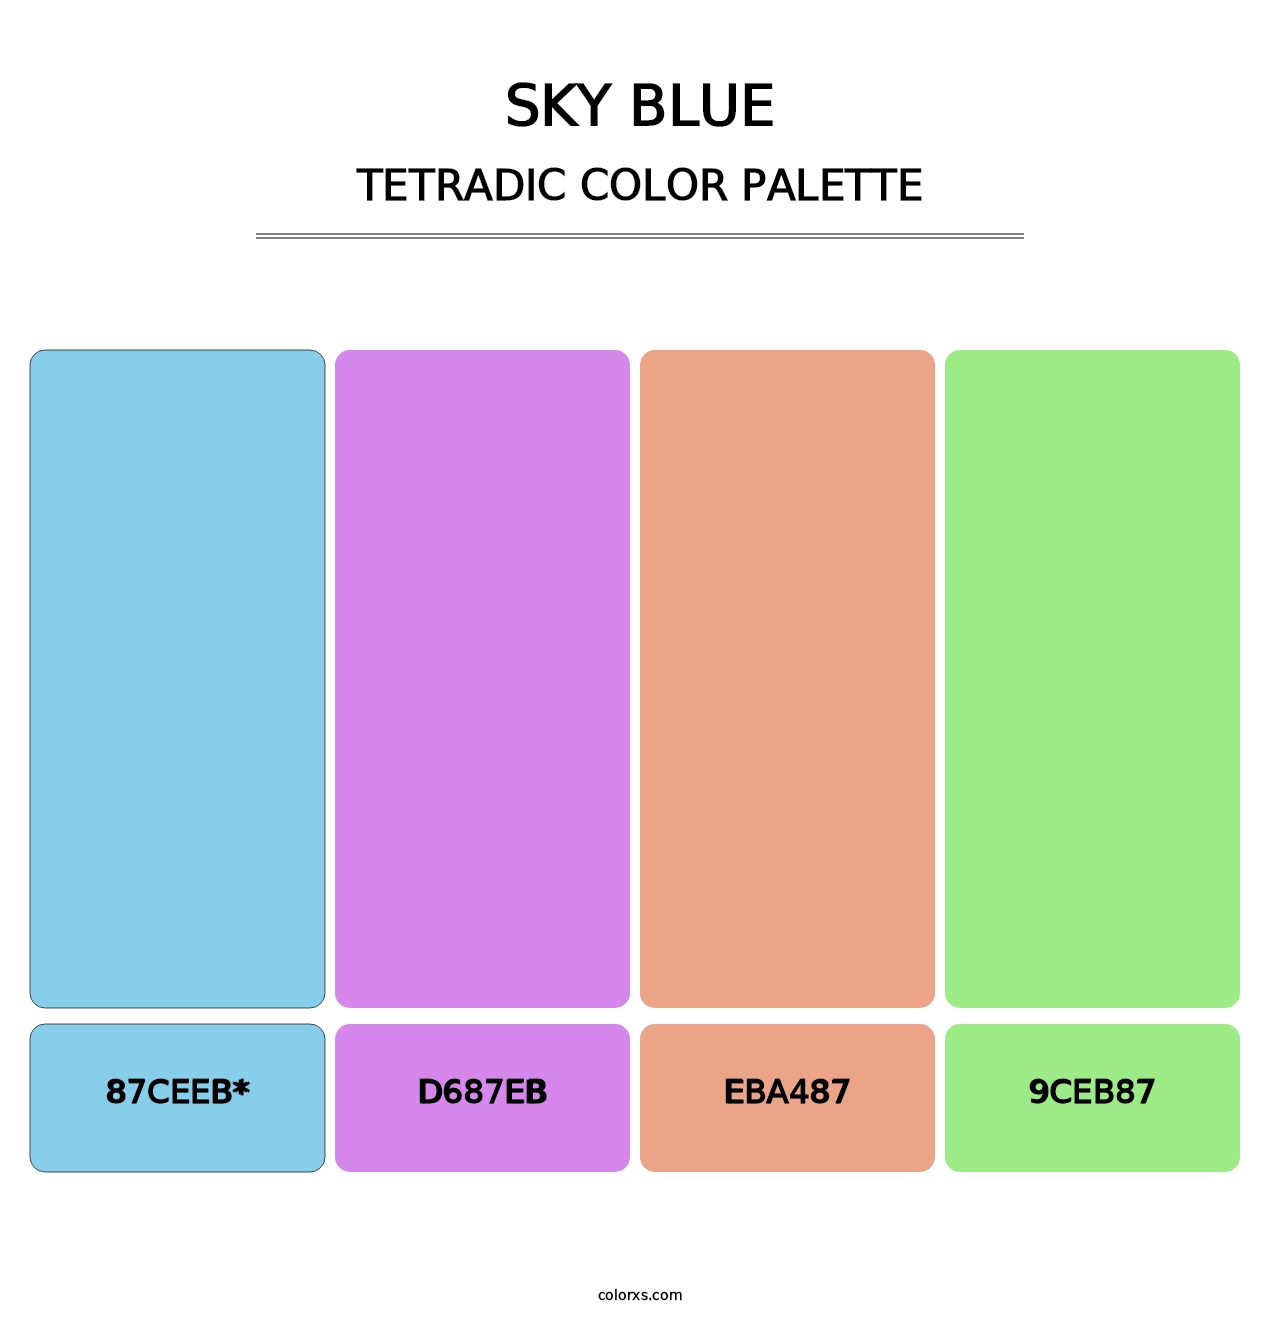 Sky blue - Tetradic Color Palette